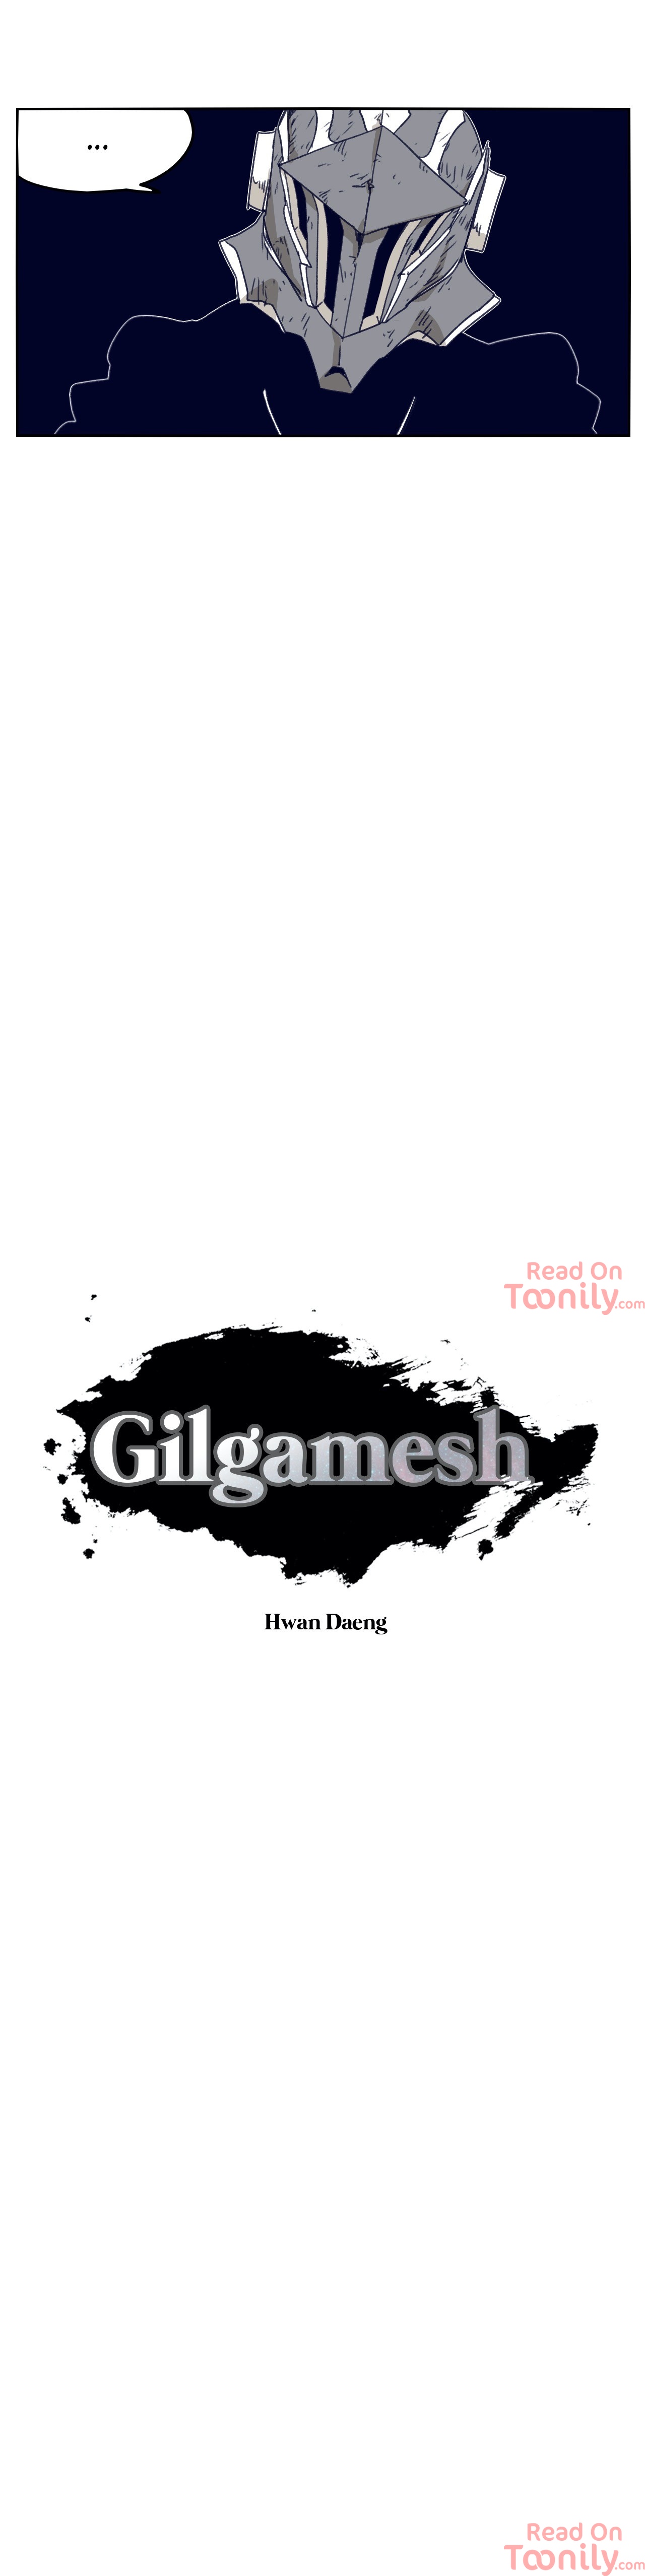 Gilgamesh image